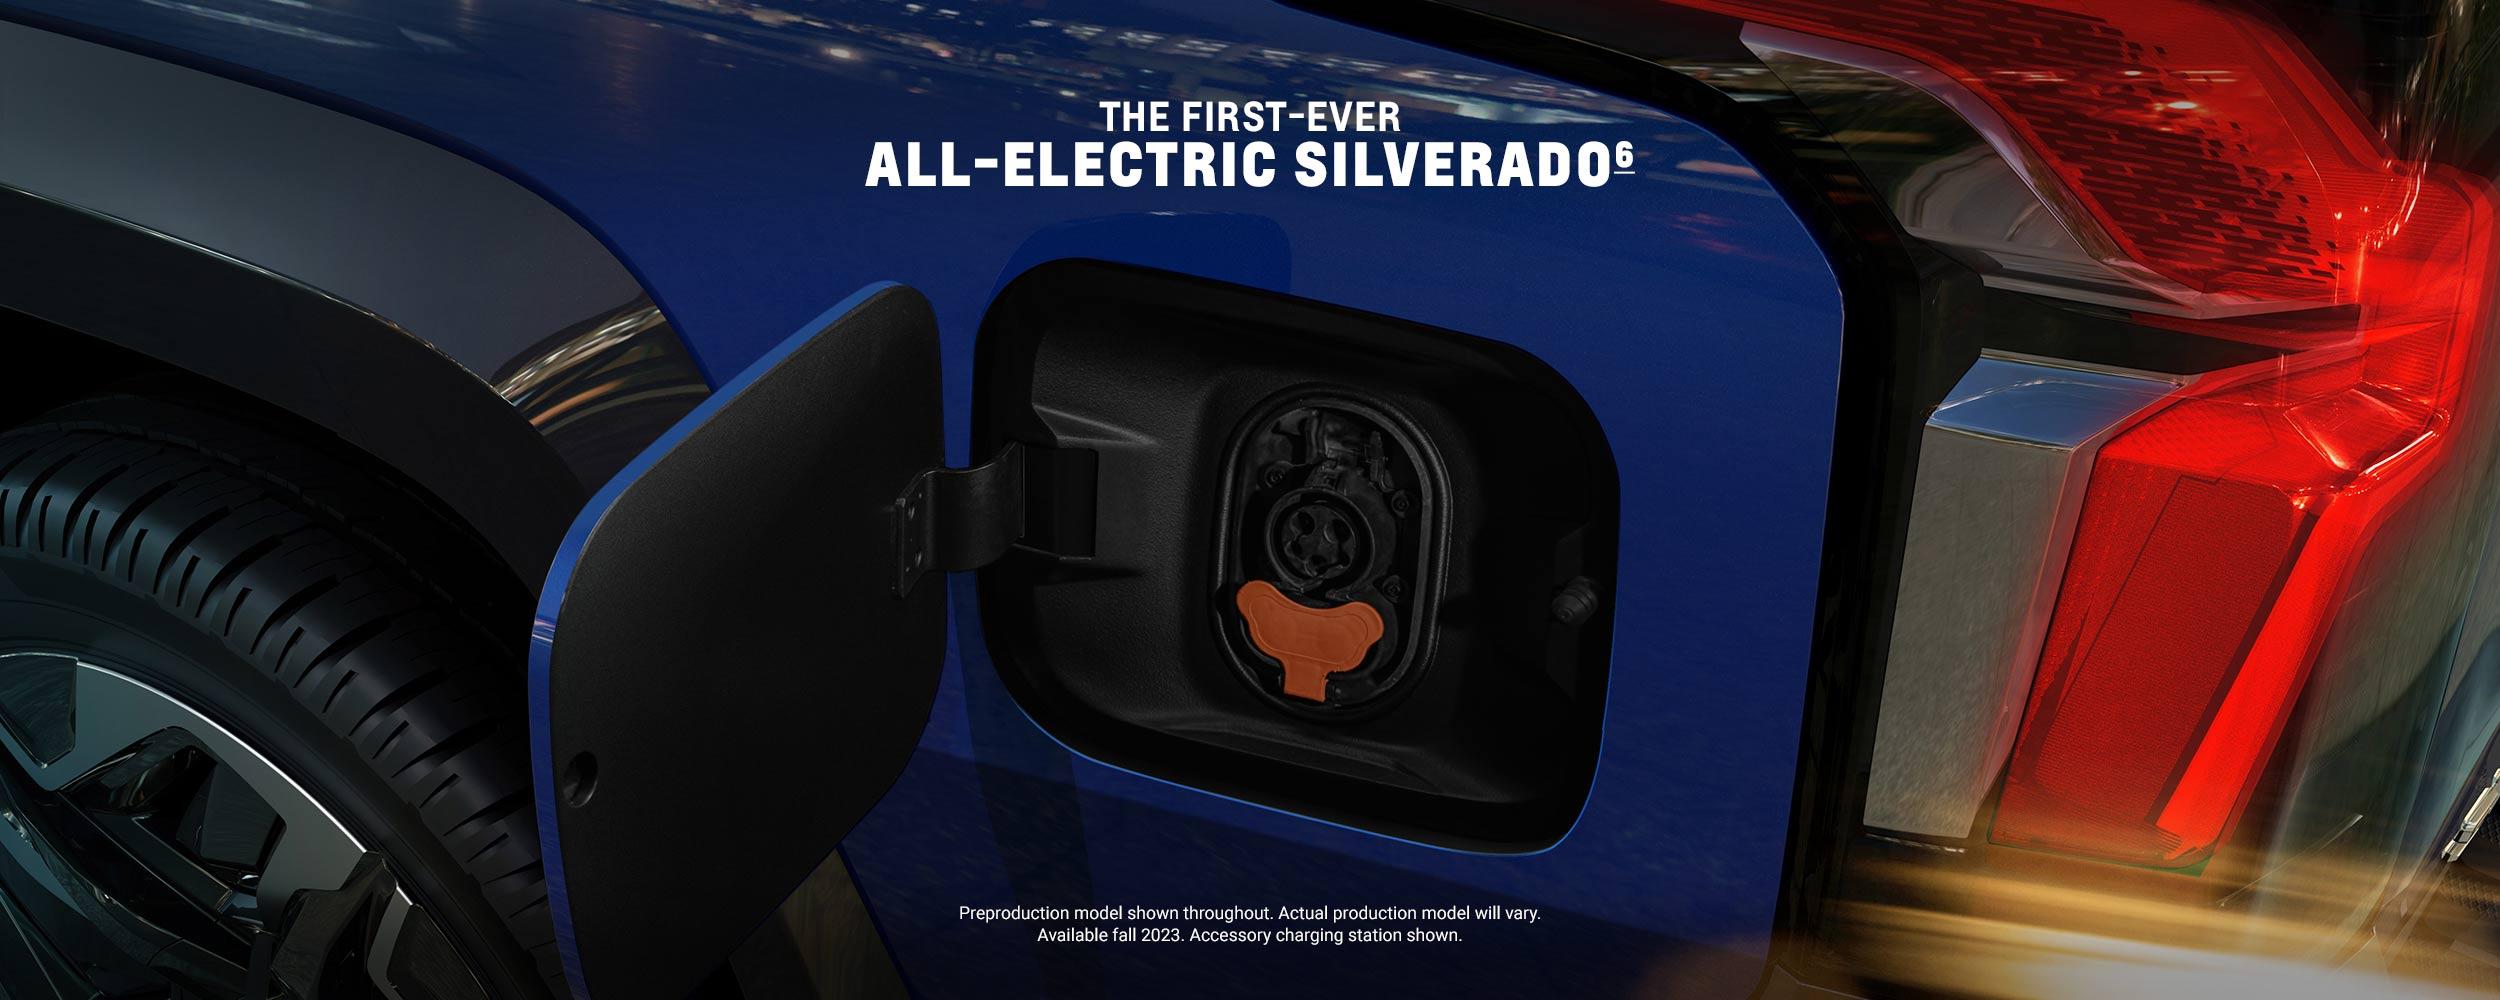 THE FIRST-EVER ALL-ELECTRIC SILVERADO